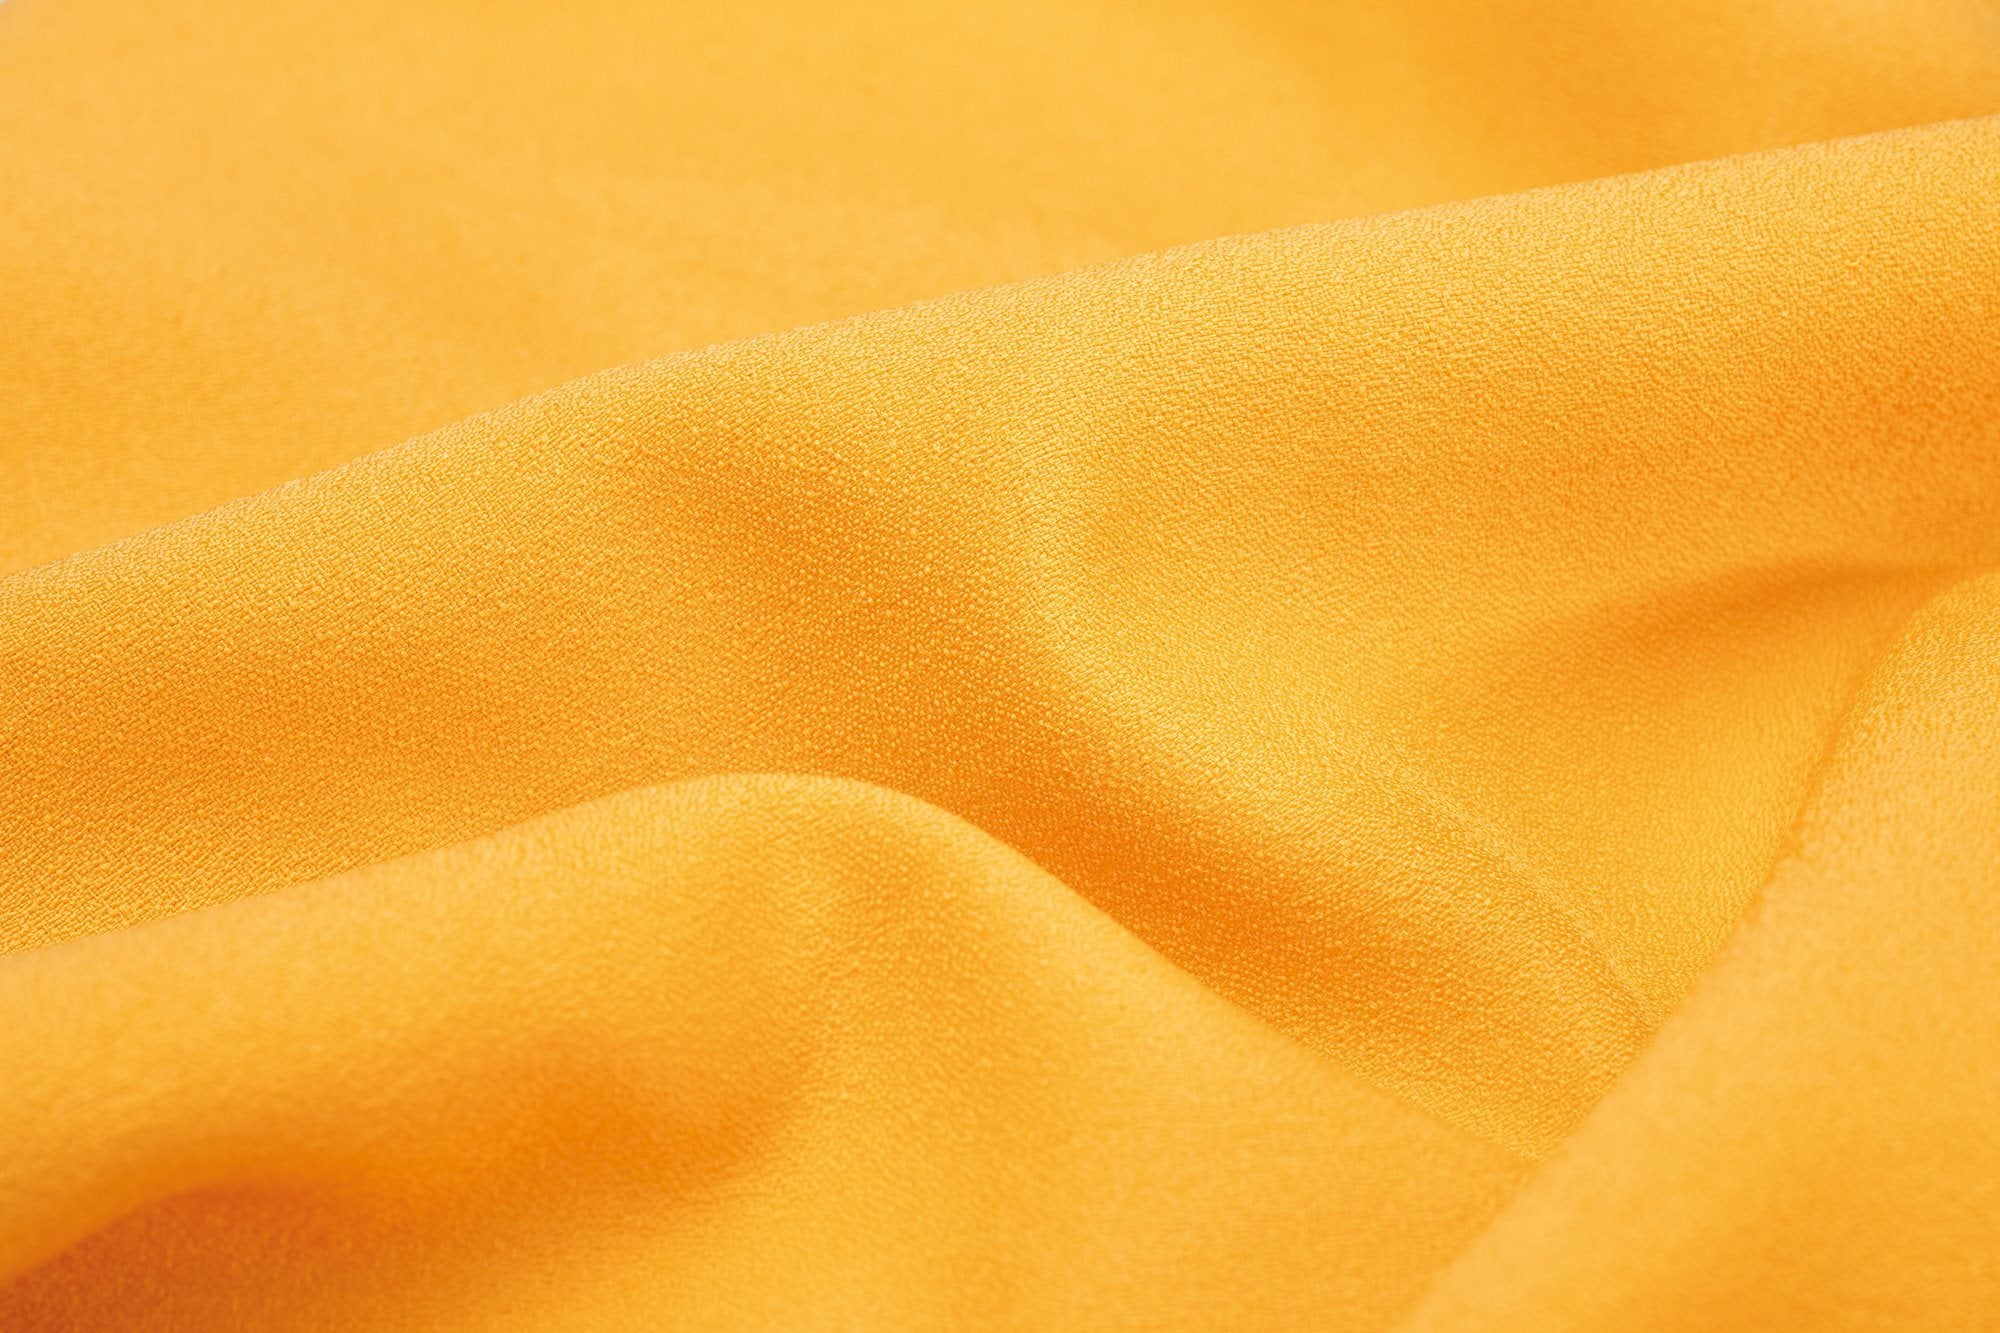 Cocoon Towel Hyperlight - Large- Sunrise Sneldrogende handdoeken - Reisartikelen-nl